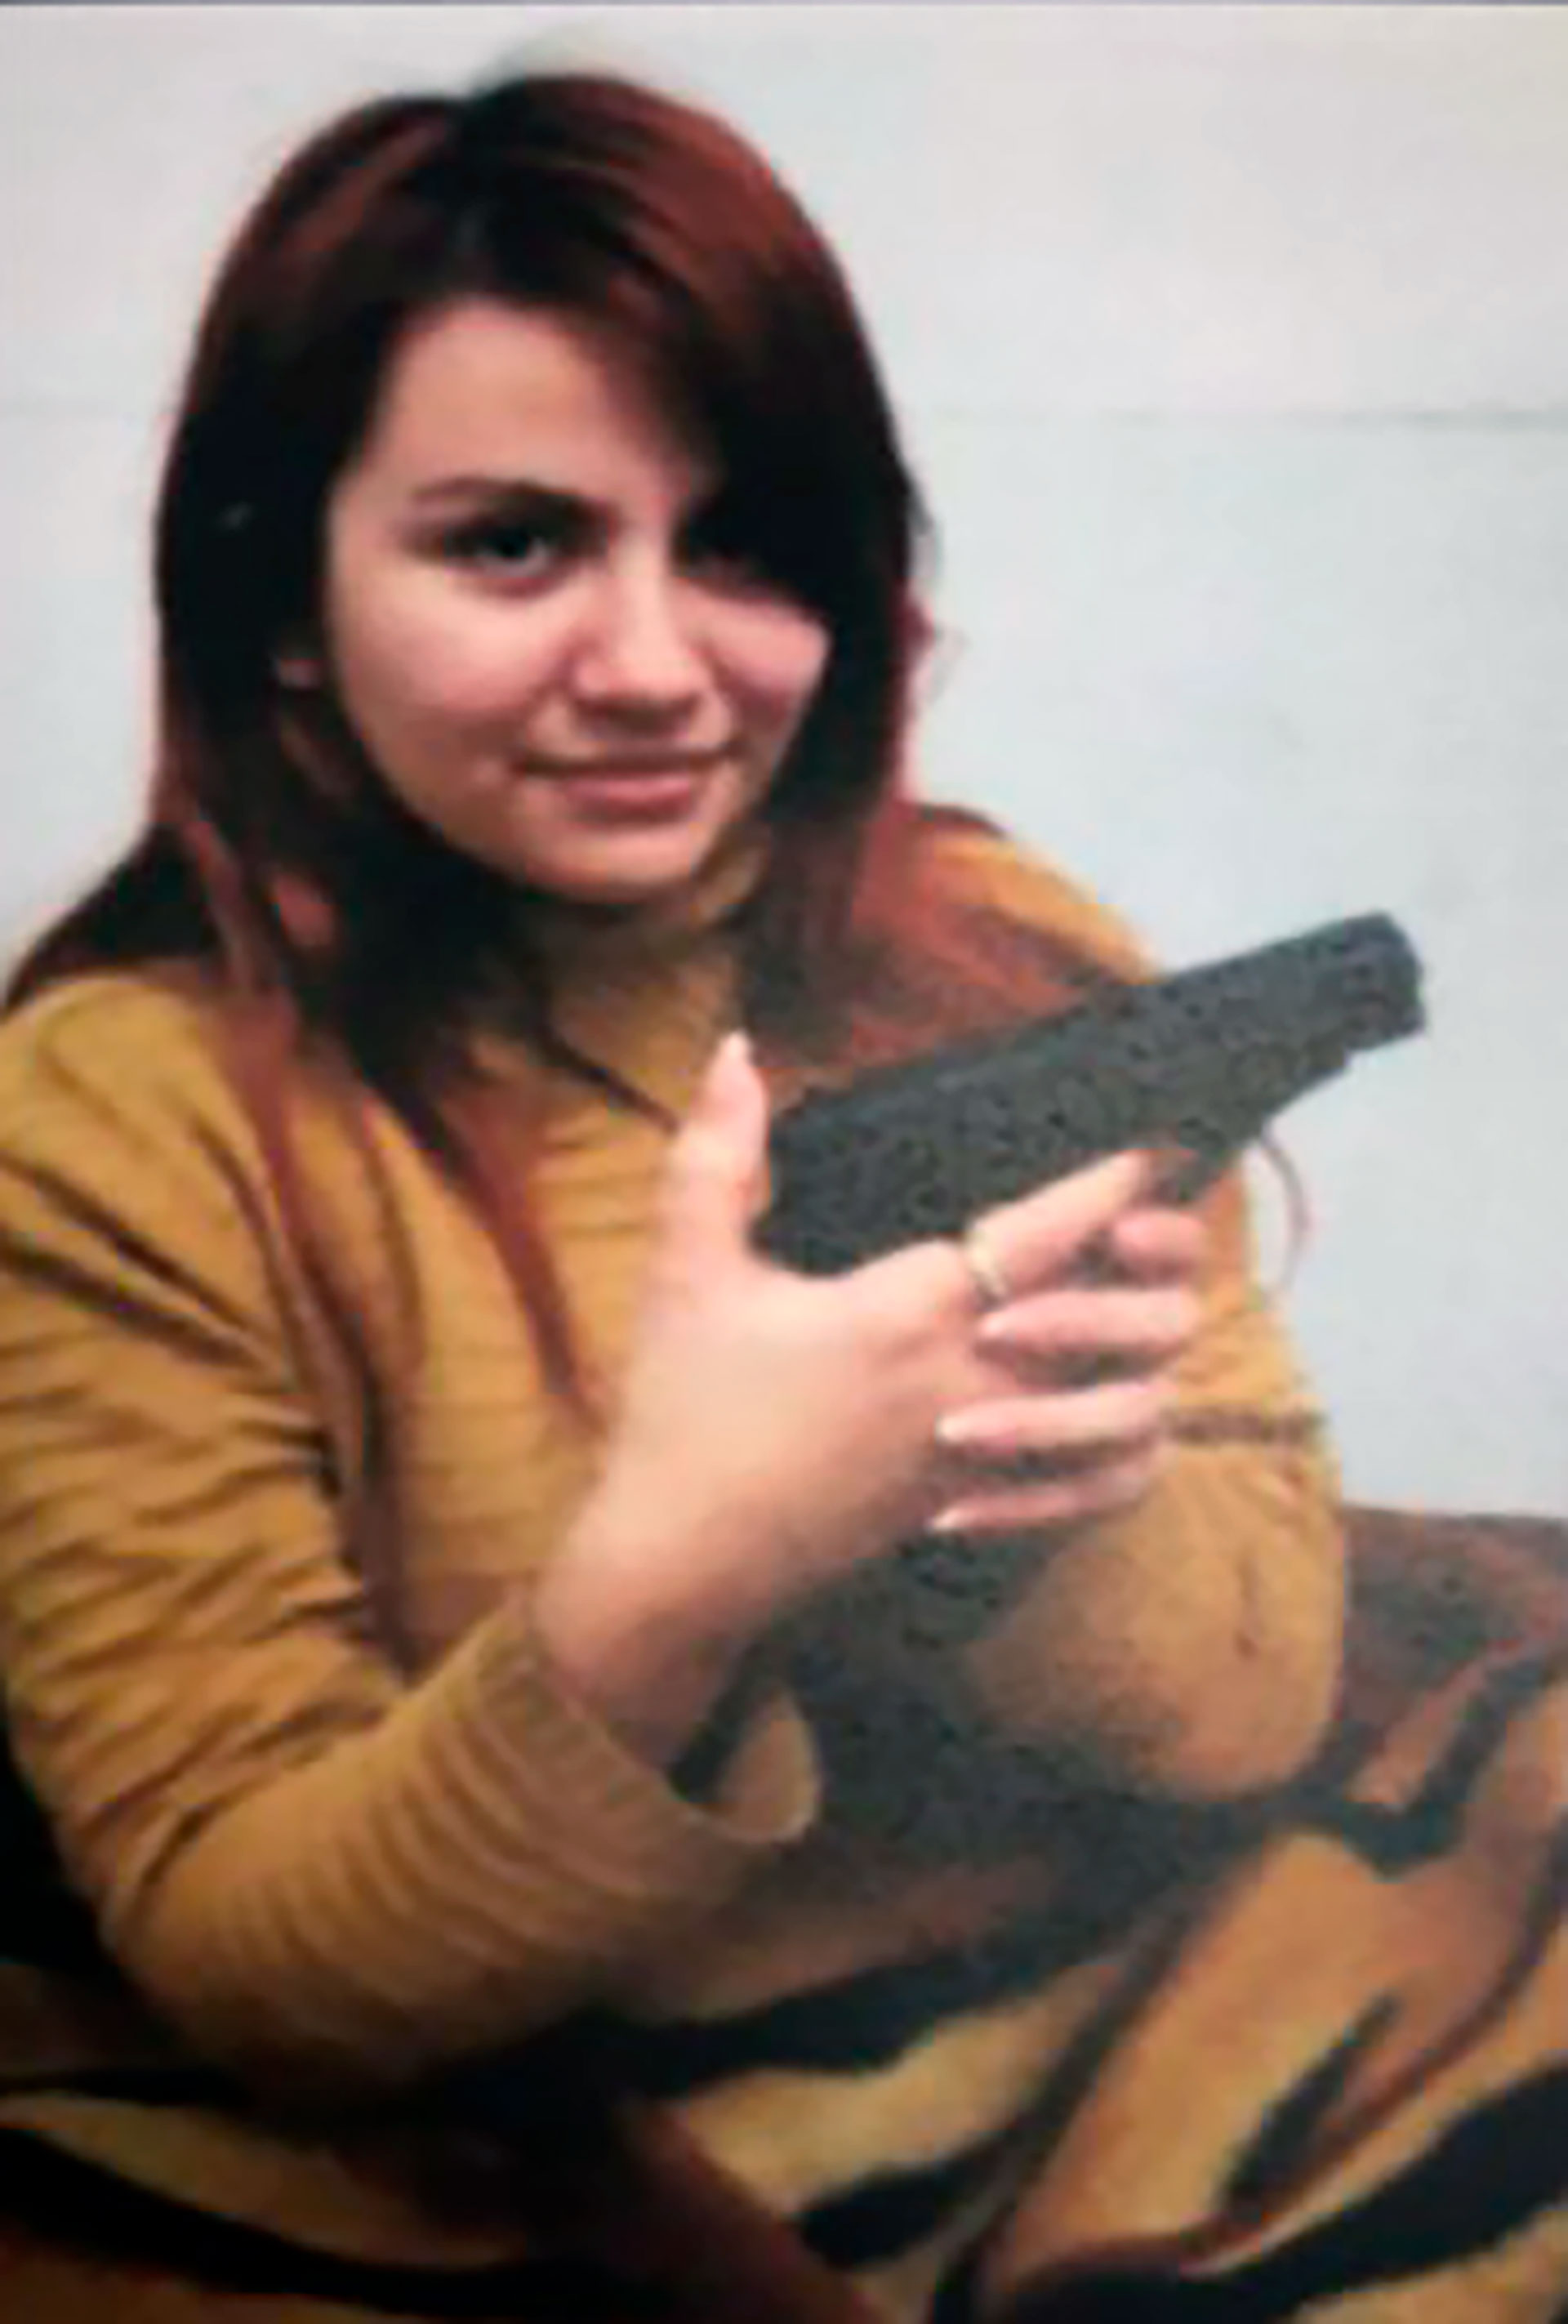 Brenda Uliarte con el arma con el que atacaron a Cristina Kirchner